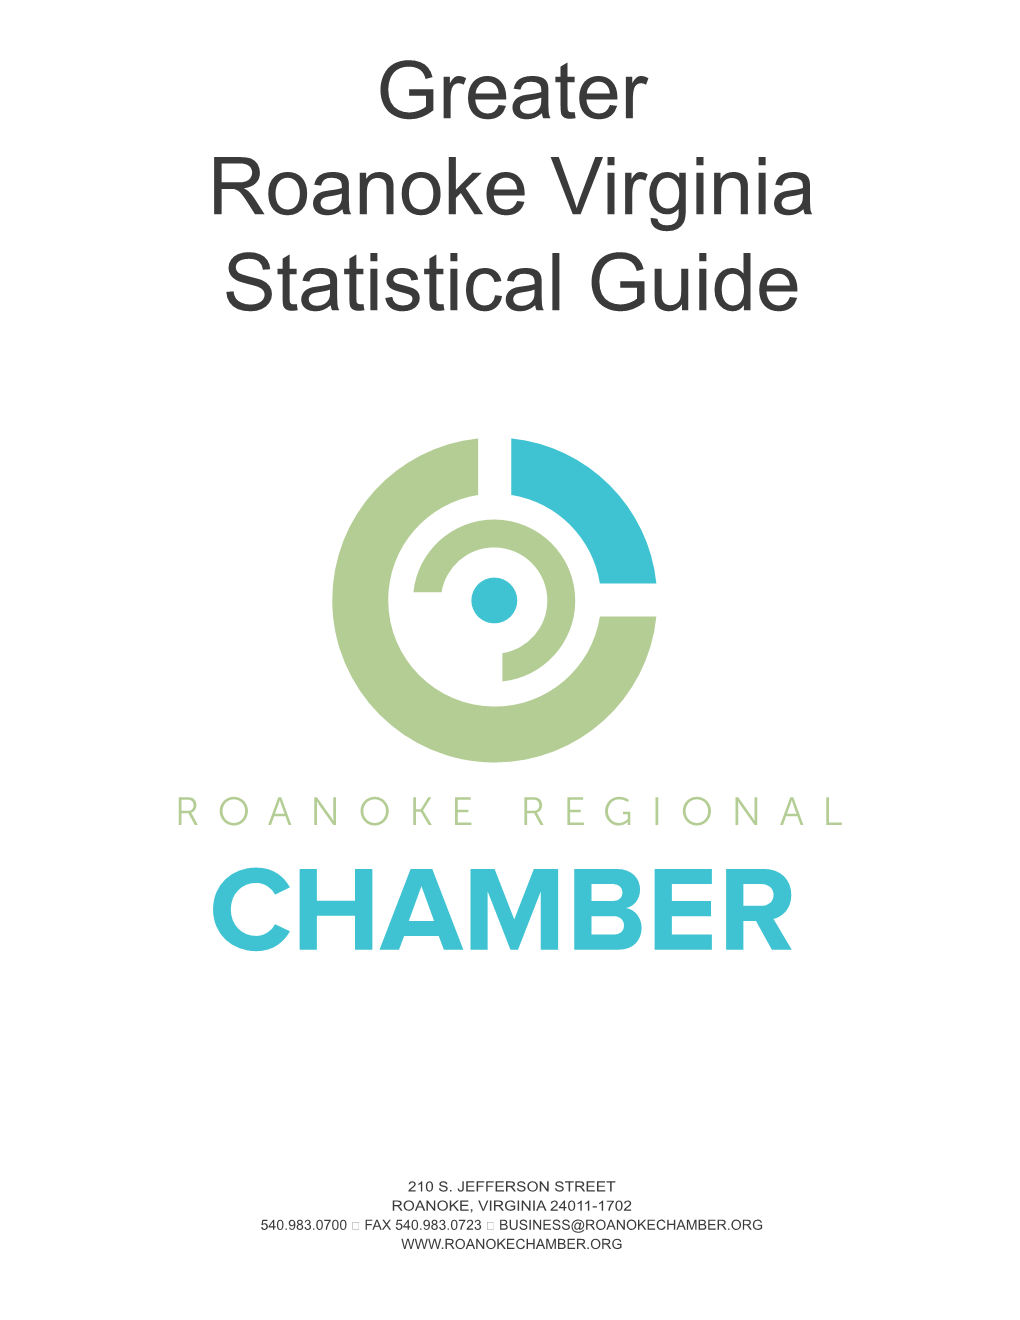 Greater Roanoke Virginia Statistical Guide